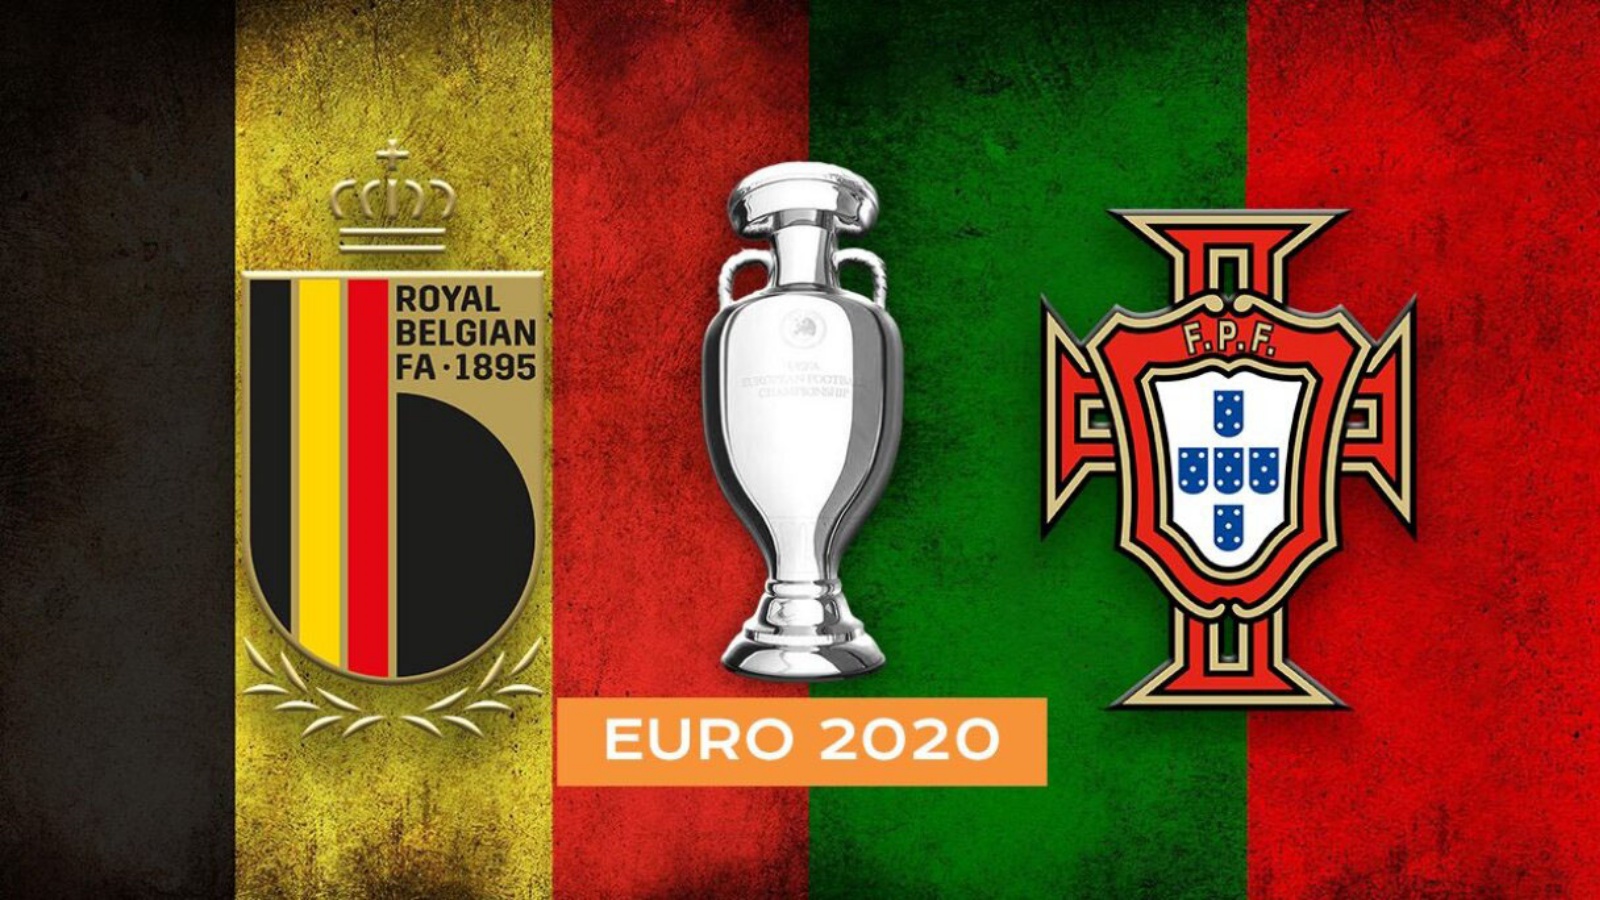 BELGIA - PORTUGALIA PRO TV LIVE EURO 2020